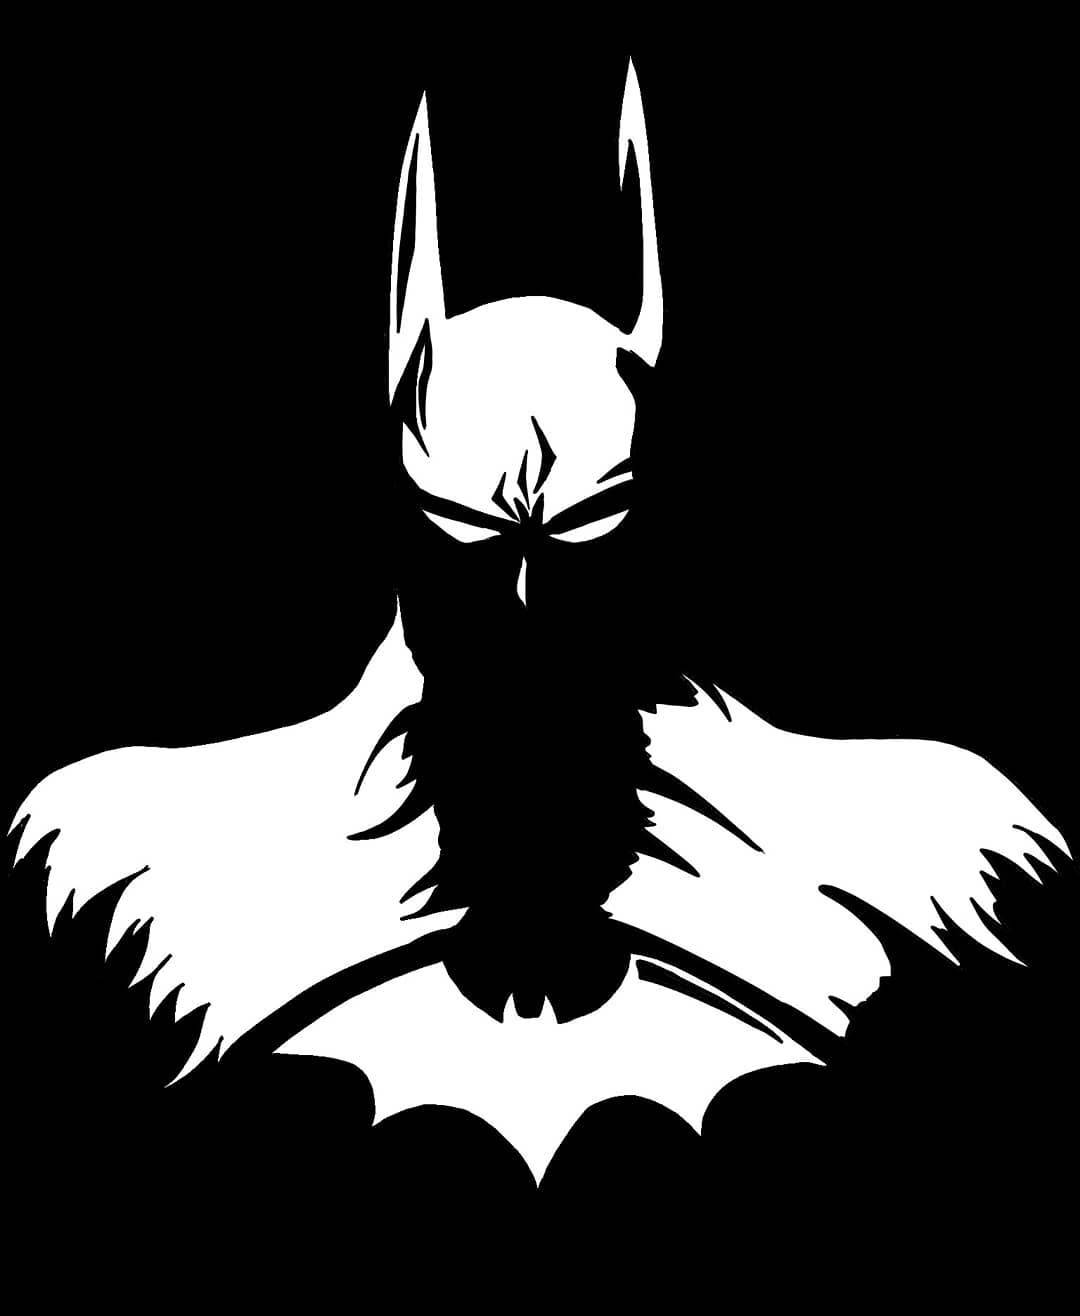 Batman (a vector drawing) by Rvuap on DeviantArt